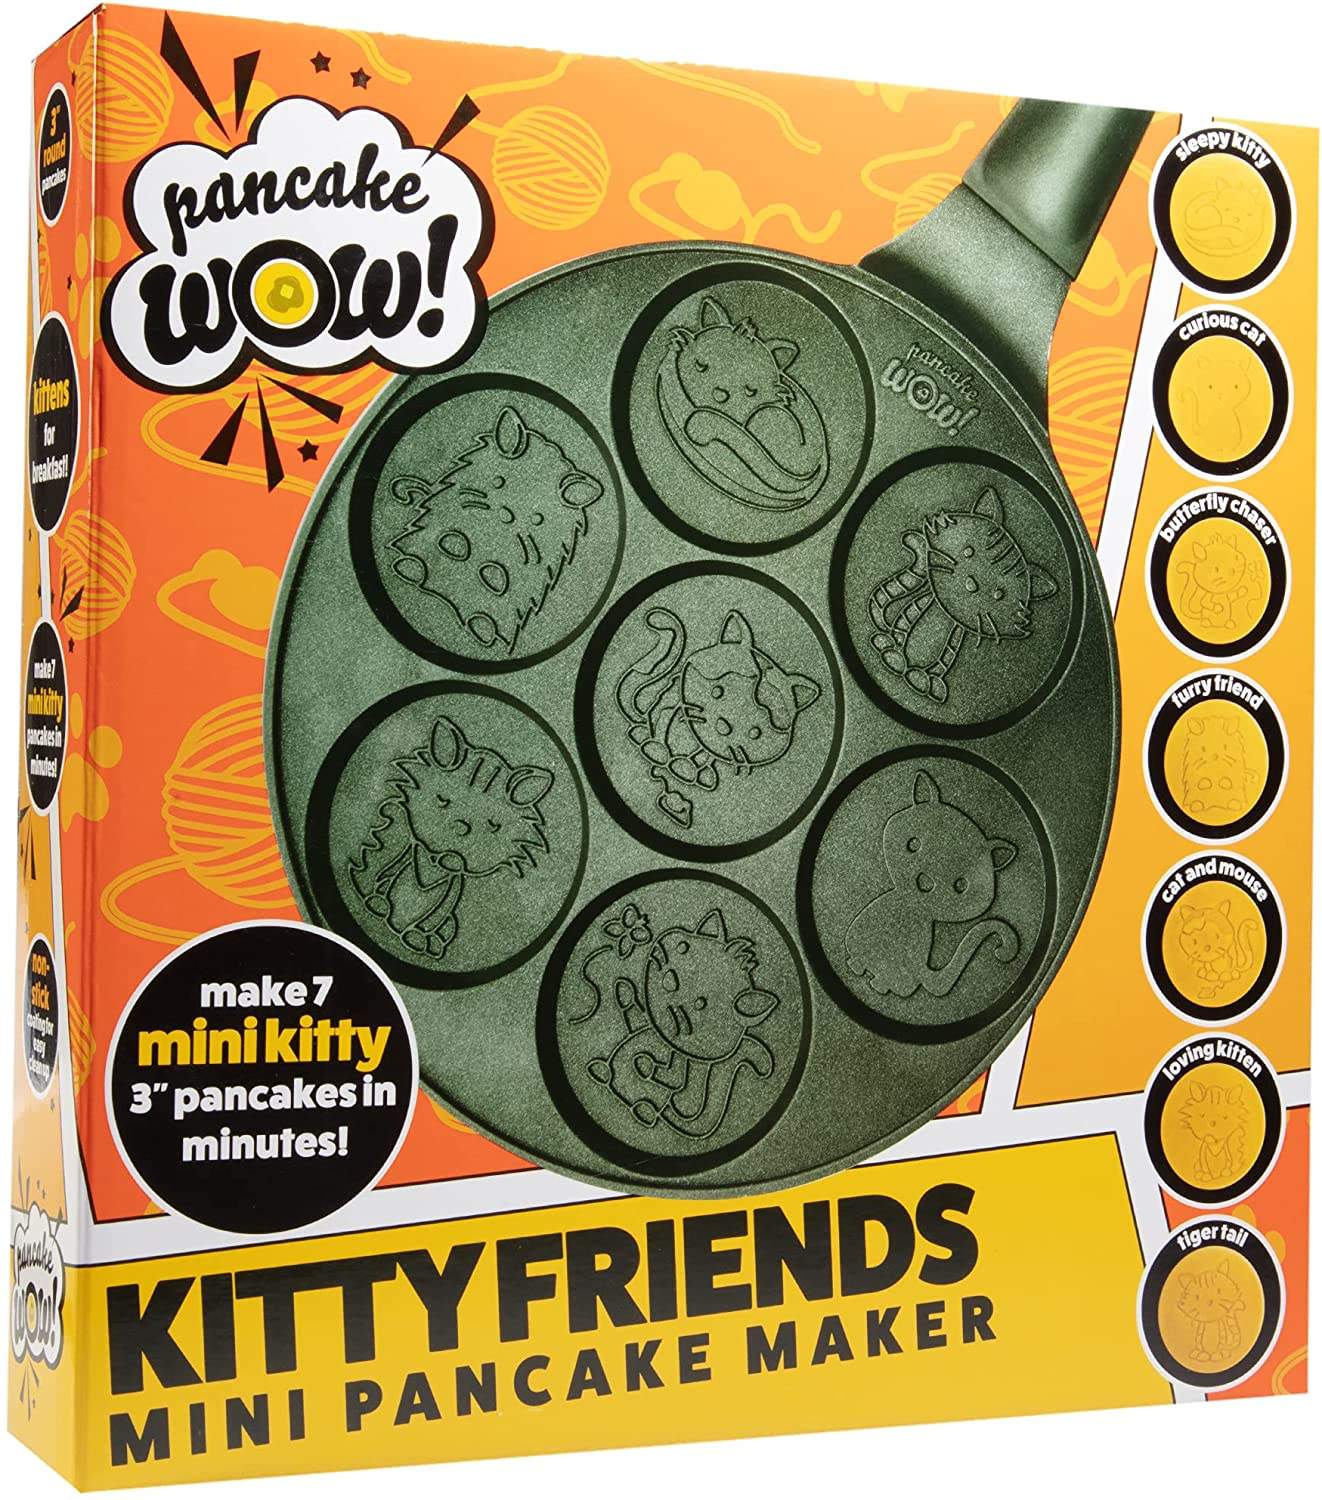 Kitty Friends-Waffle Wow!-